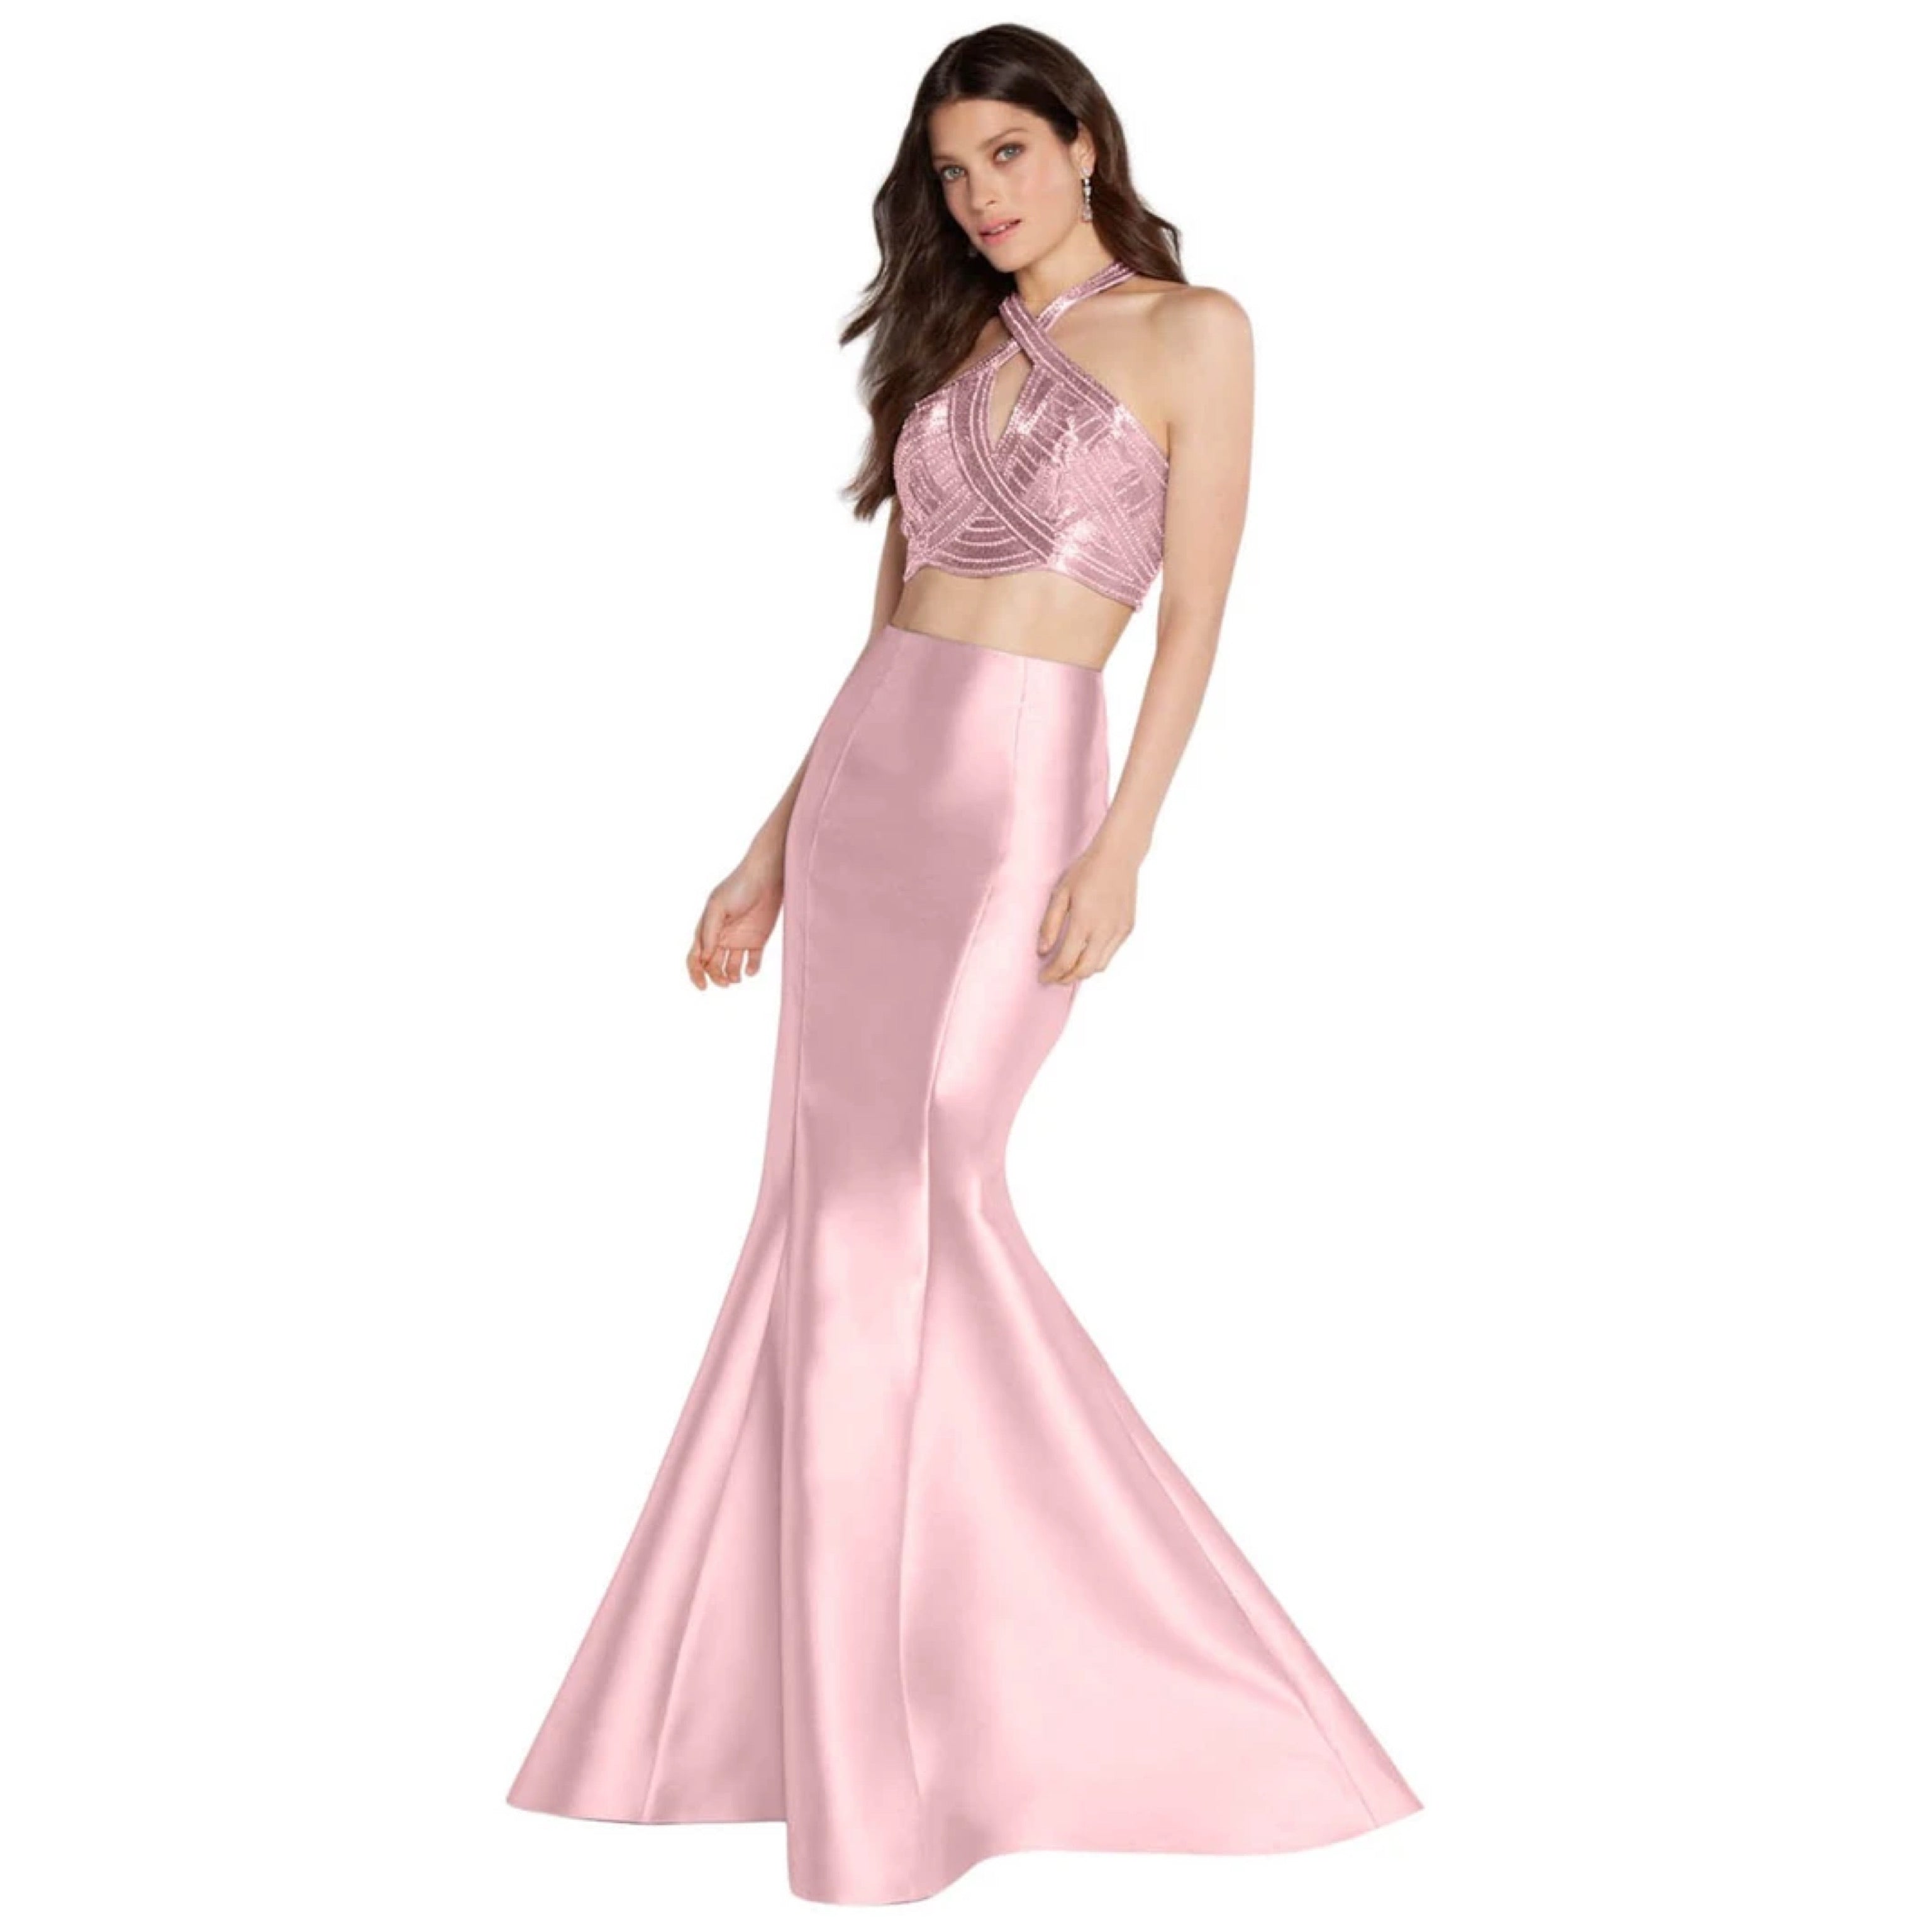 Alyce rose quartz 2-piece dress, size 6, NEW WITH TAGS!